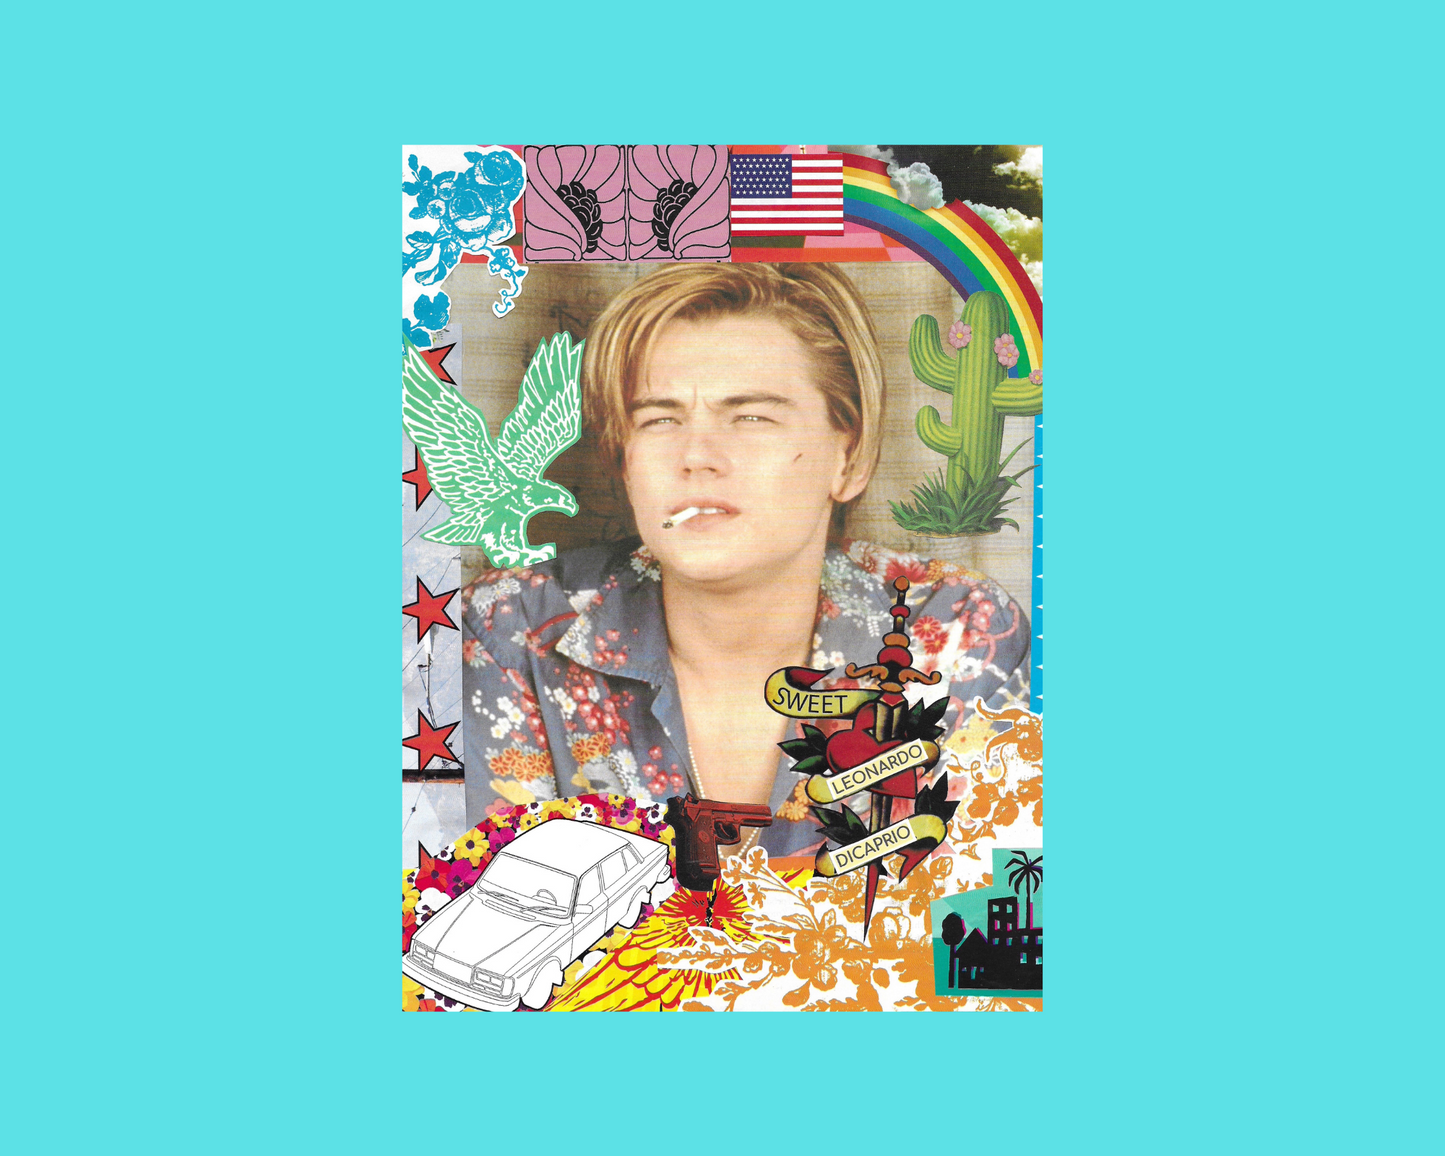 Print of Handmade Collage of Leonardo DiCaprio